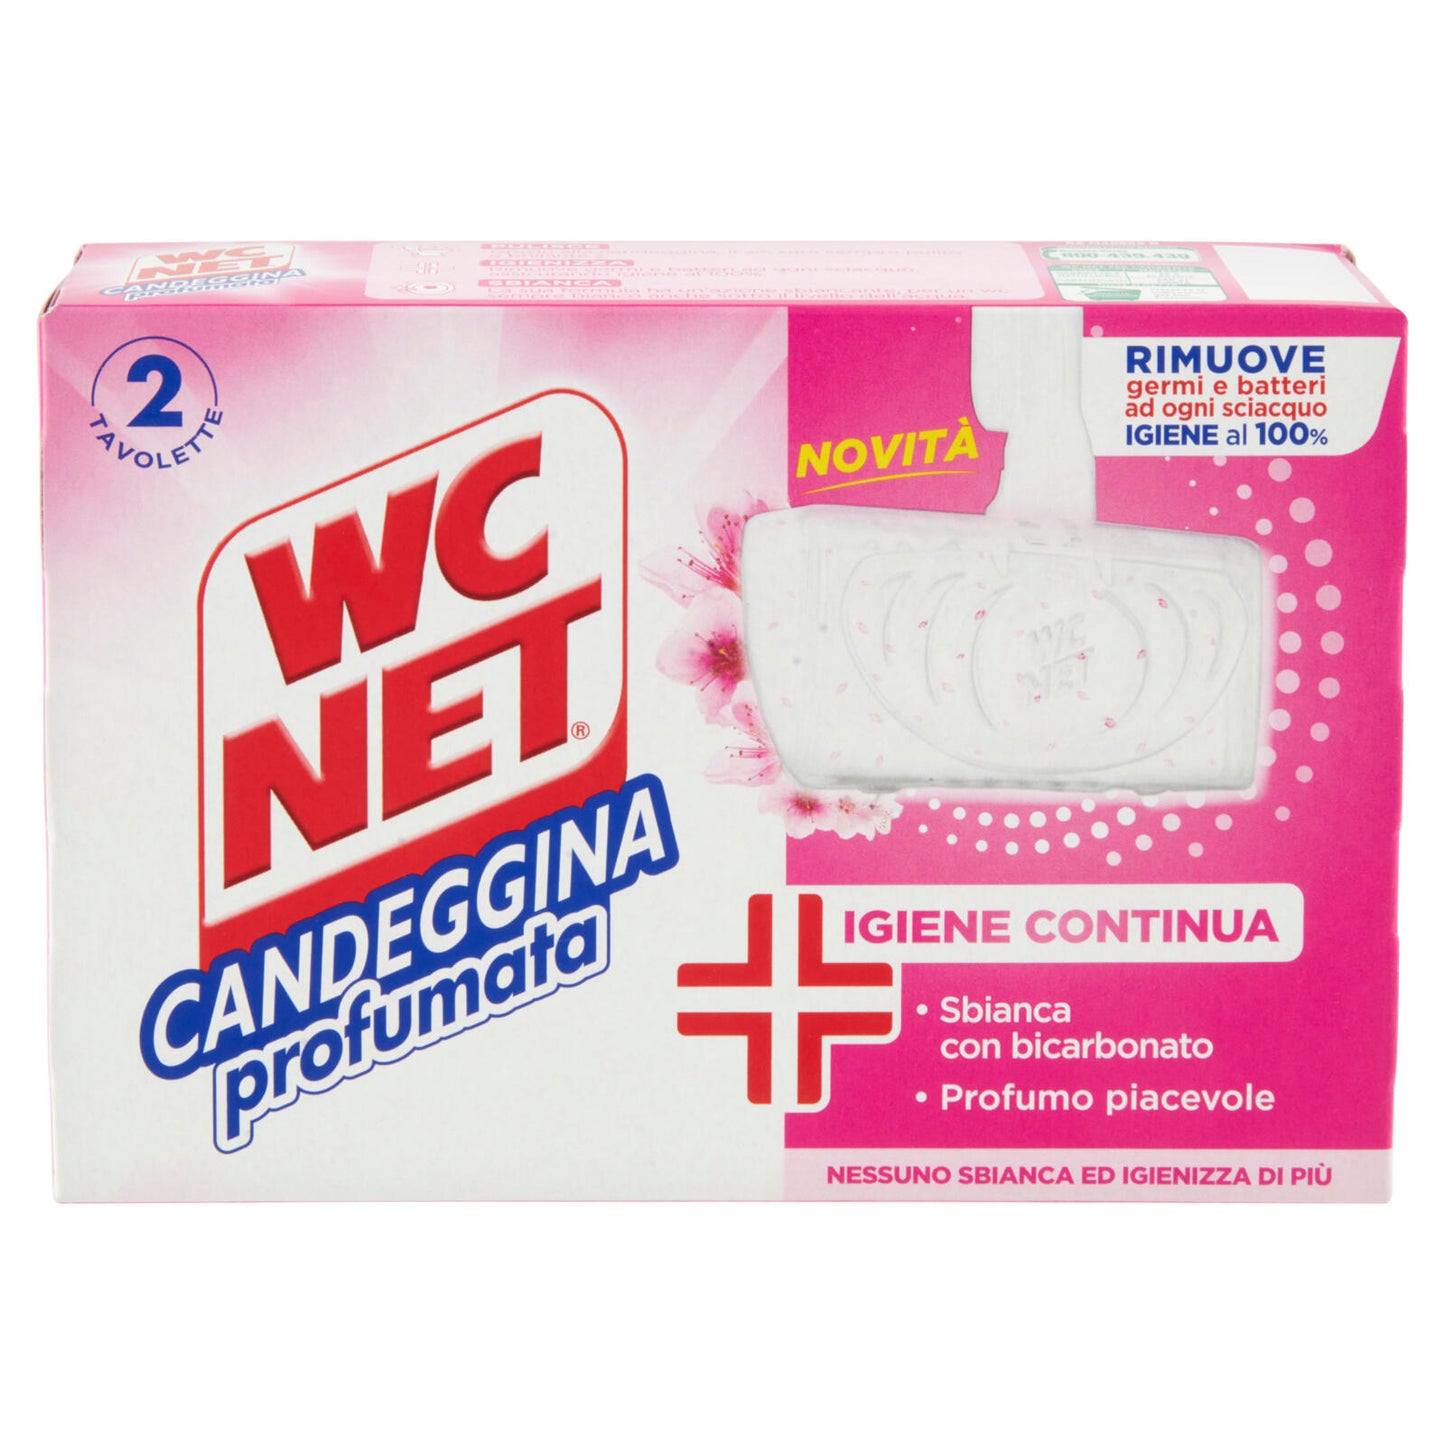 Wc Net - Tavoletta Candeggina Profumata 3 Effect, Azione Pulente e Sbiancante, Flower Fresh, 2 pz